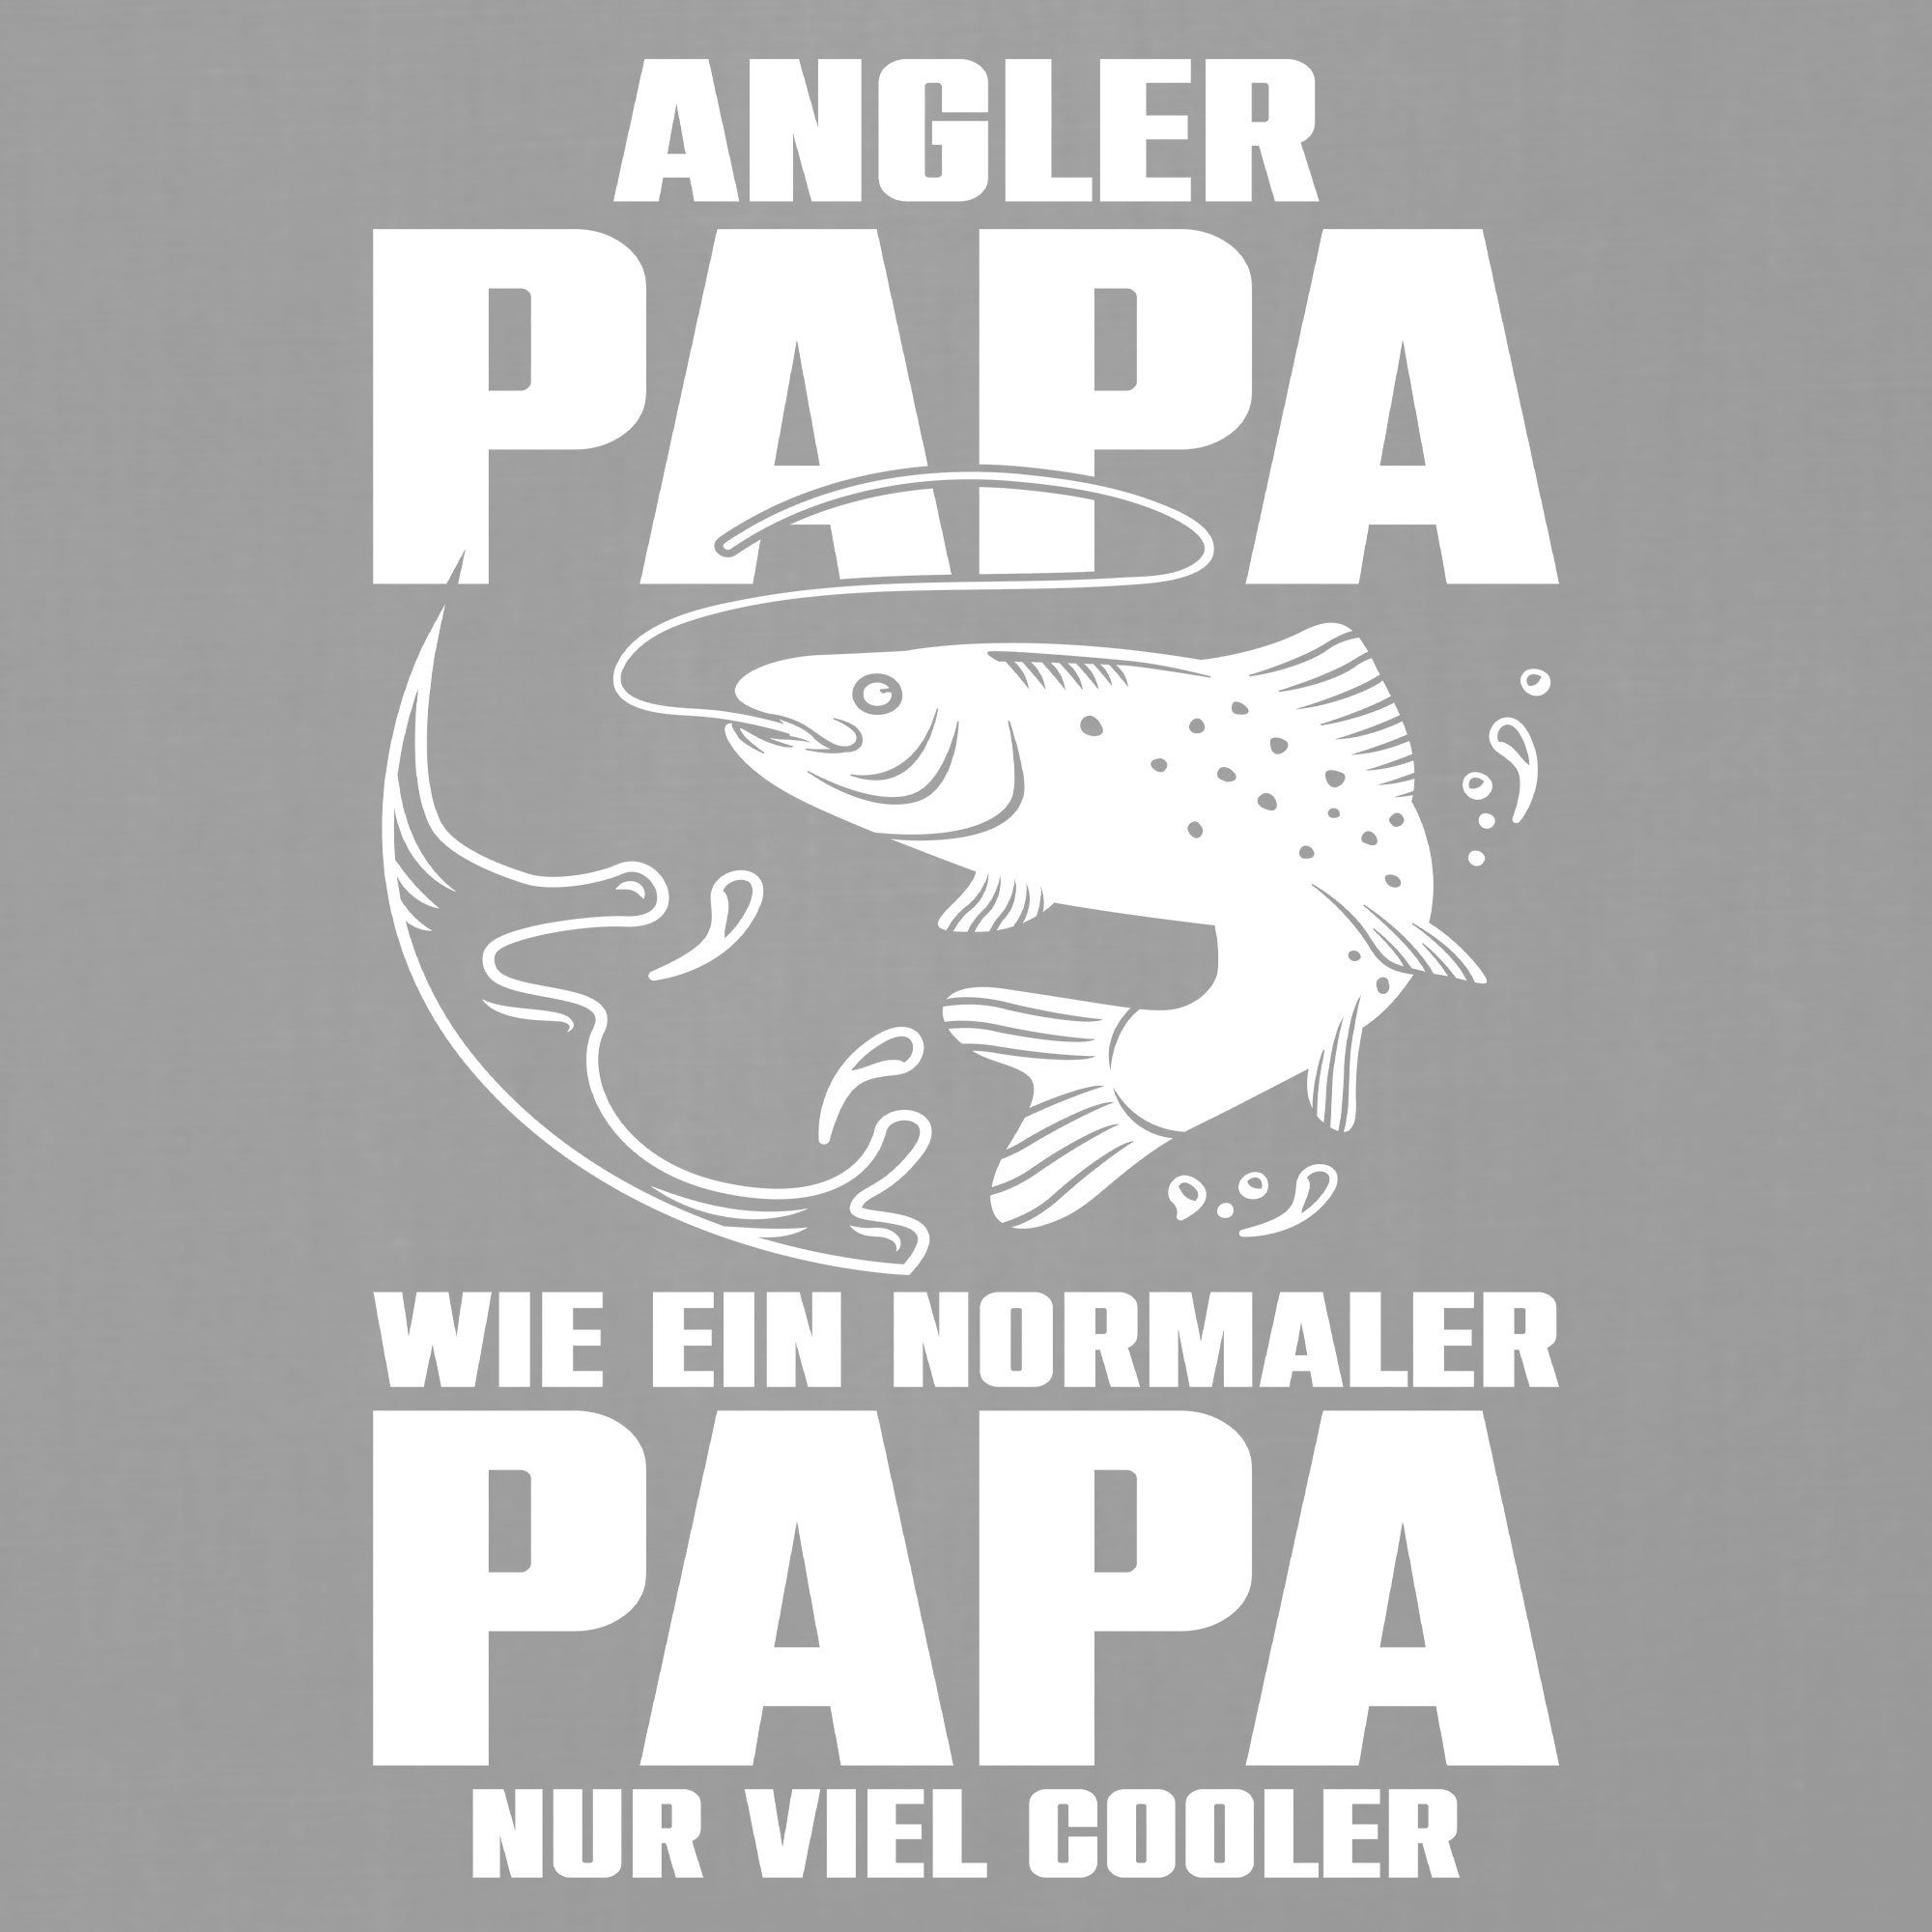 Heather Cooler Grau - Vater Papa T-Shirt Vatertag Quattro Formatee Kurzarmshirt Angler (1-tlg) Herren